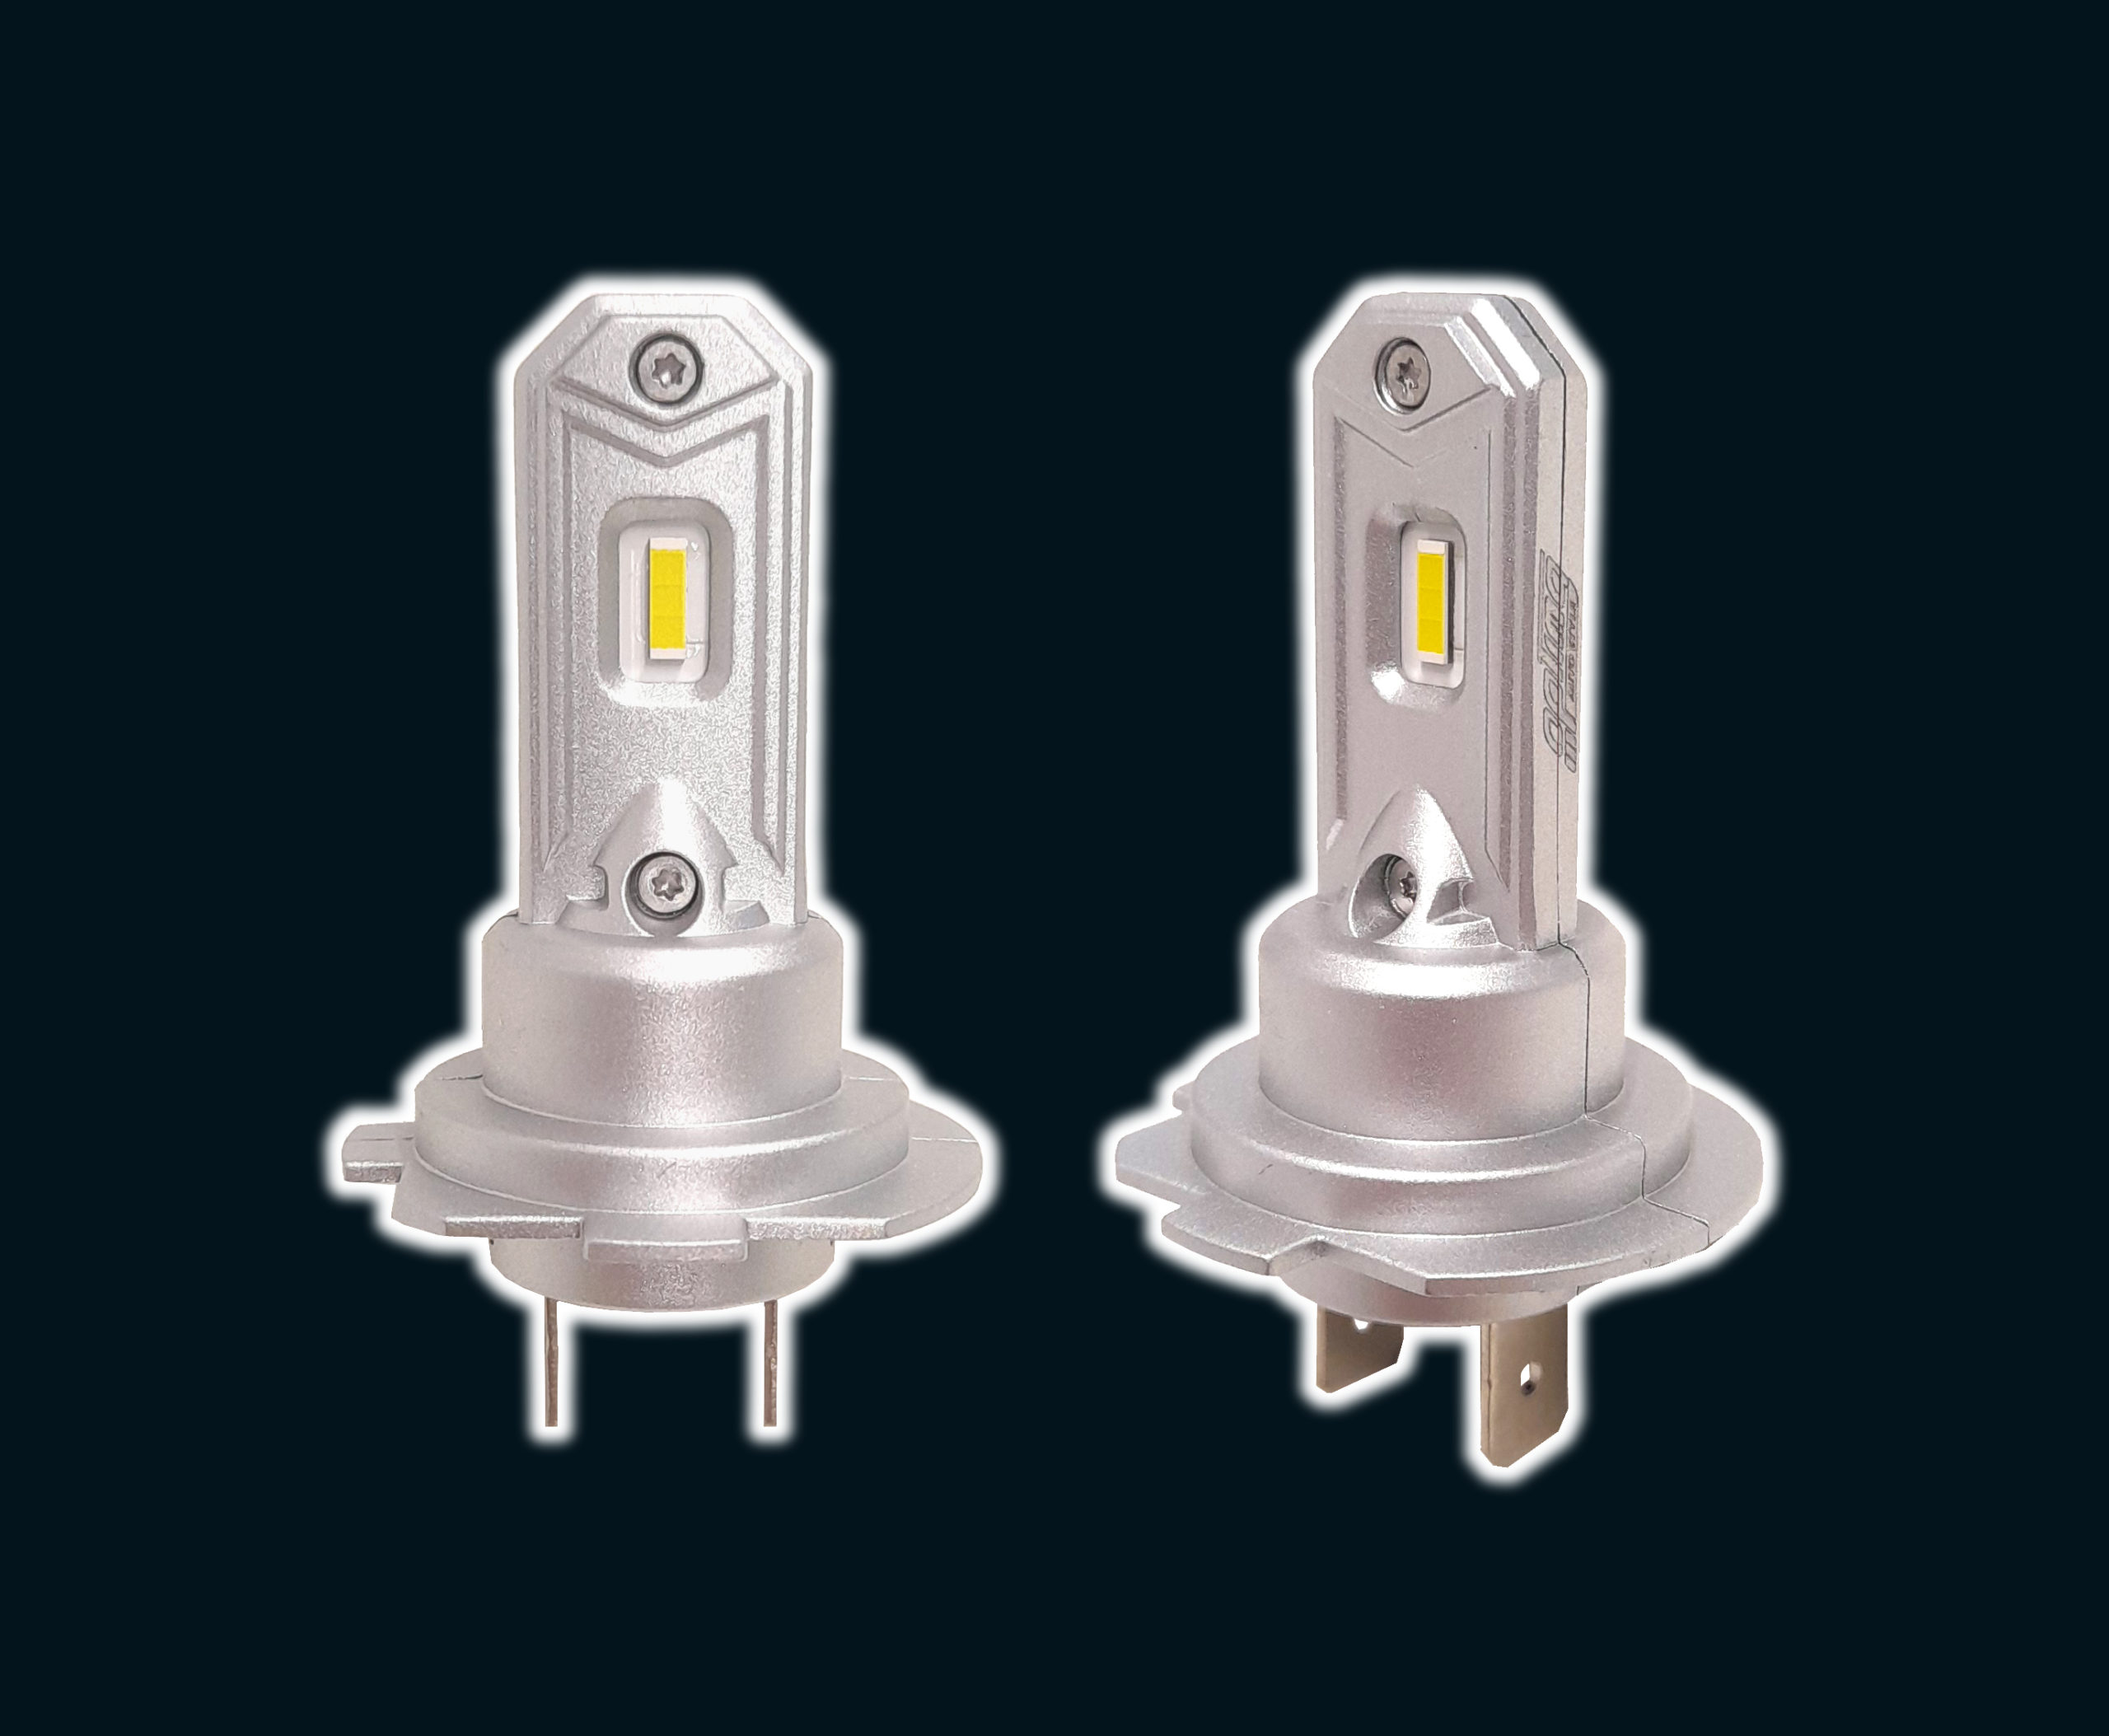 KIT CONVERSIONE A LED CANBUS, LAMPADE BI-LED ATTACCO H7, 36W 12V - 8000LM  (kit) - VENTILATO